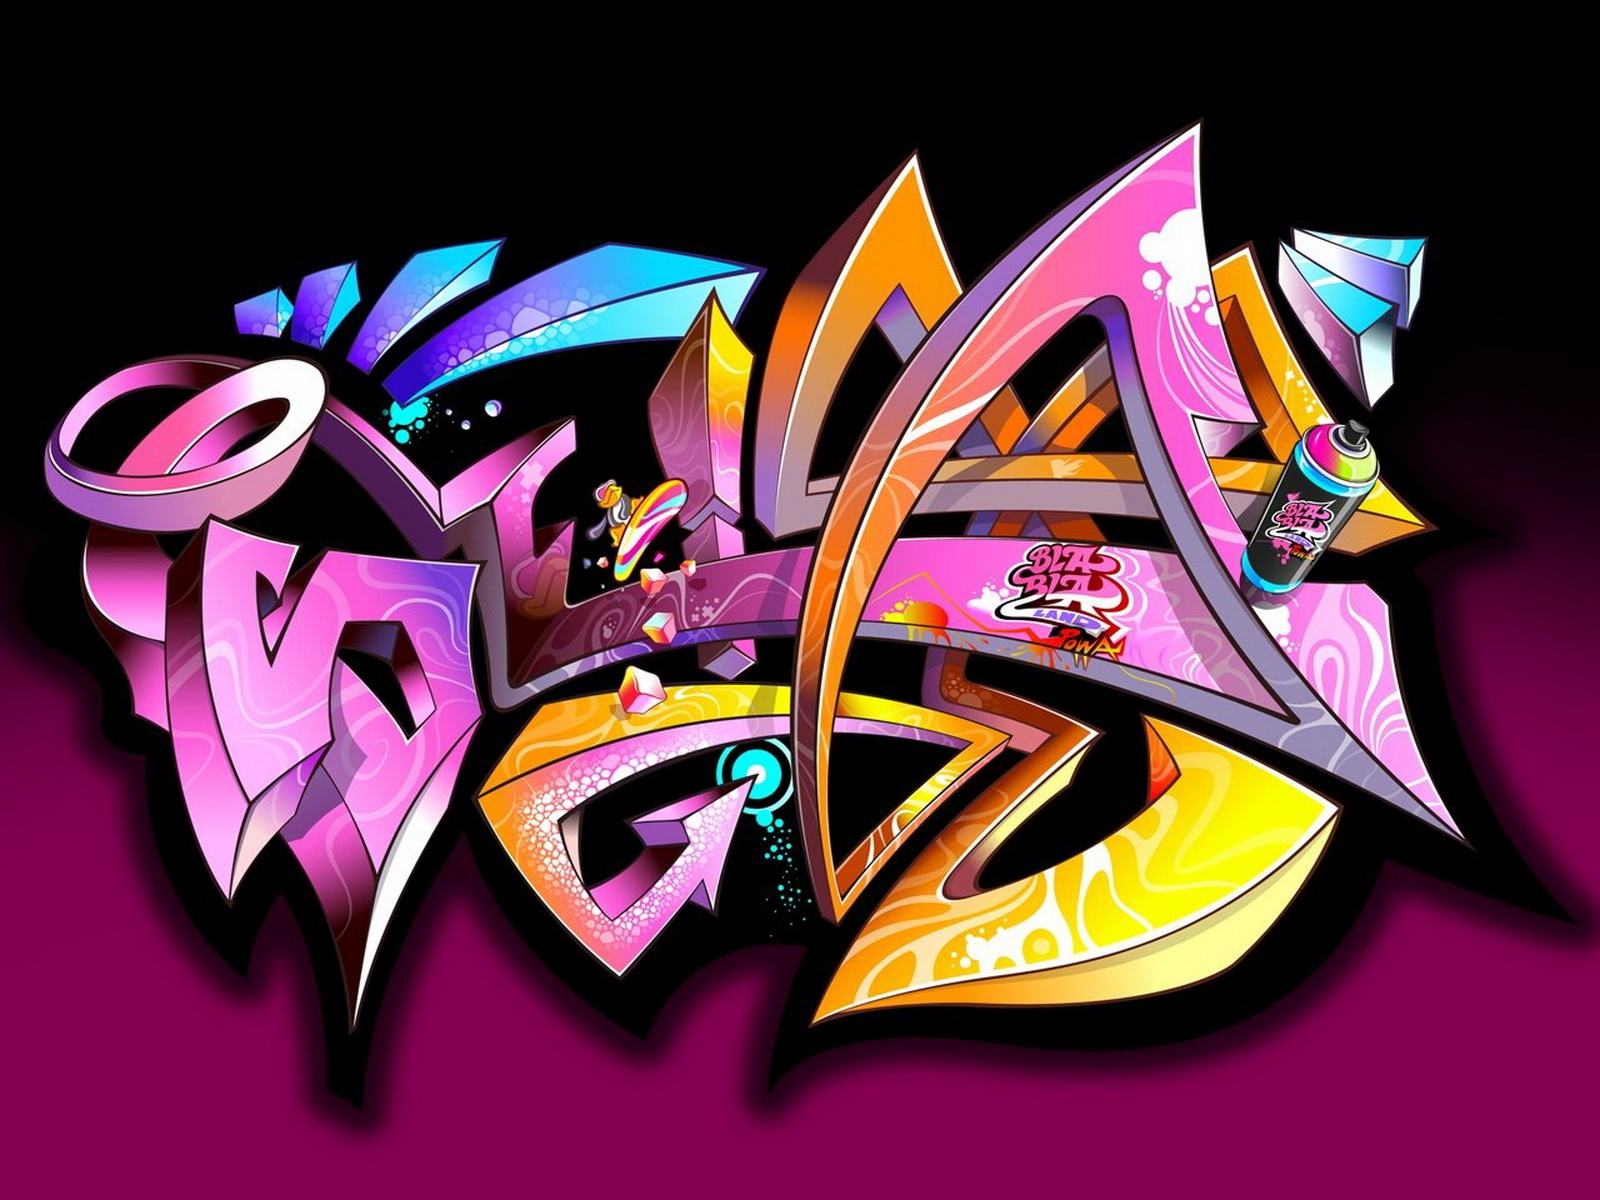 Download Graffiti Wallpaper Images For Laptop amp Desktops 1600x1200